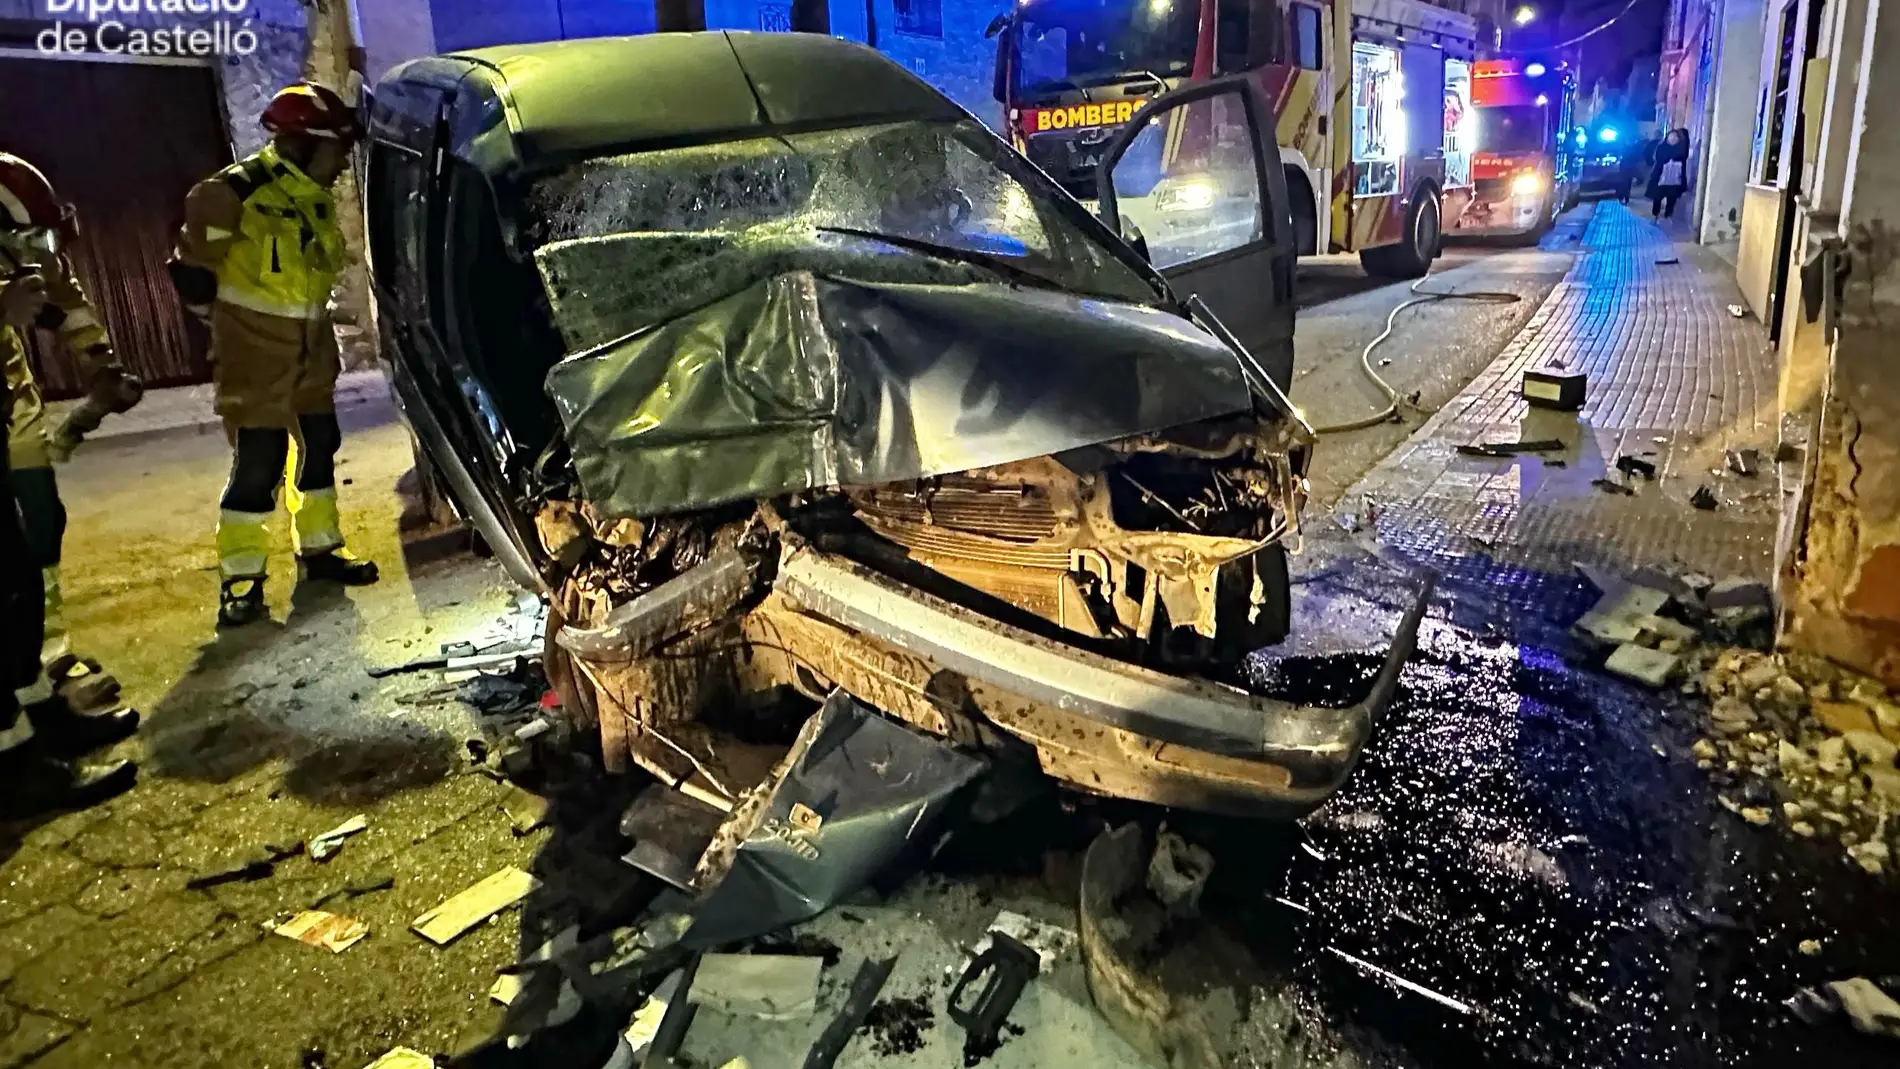 Fallecen dos personas en un grave accidente de tráfico en Jérica